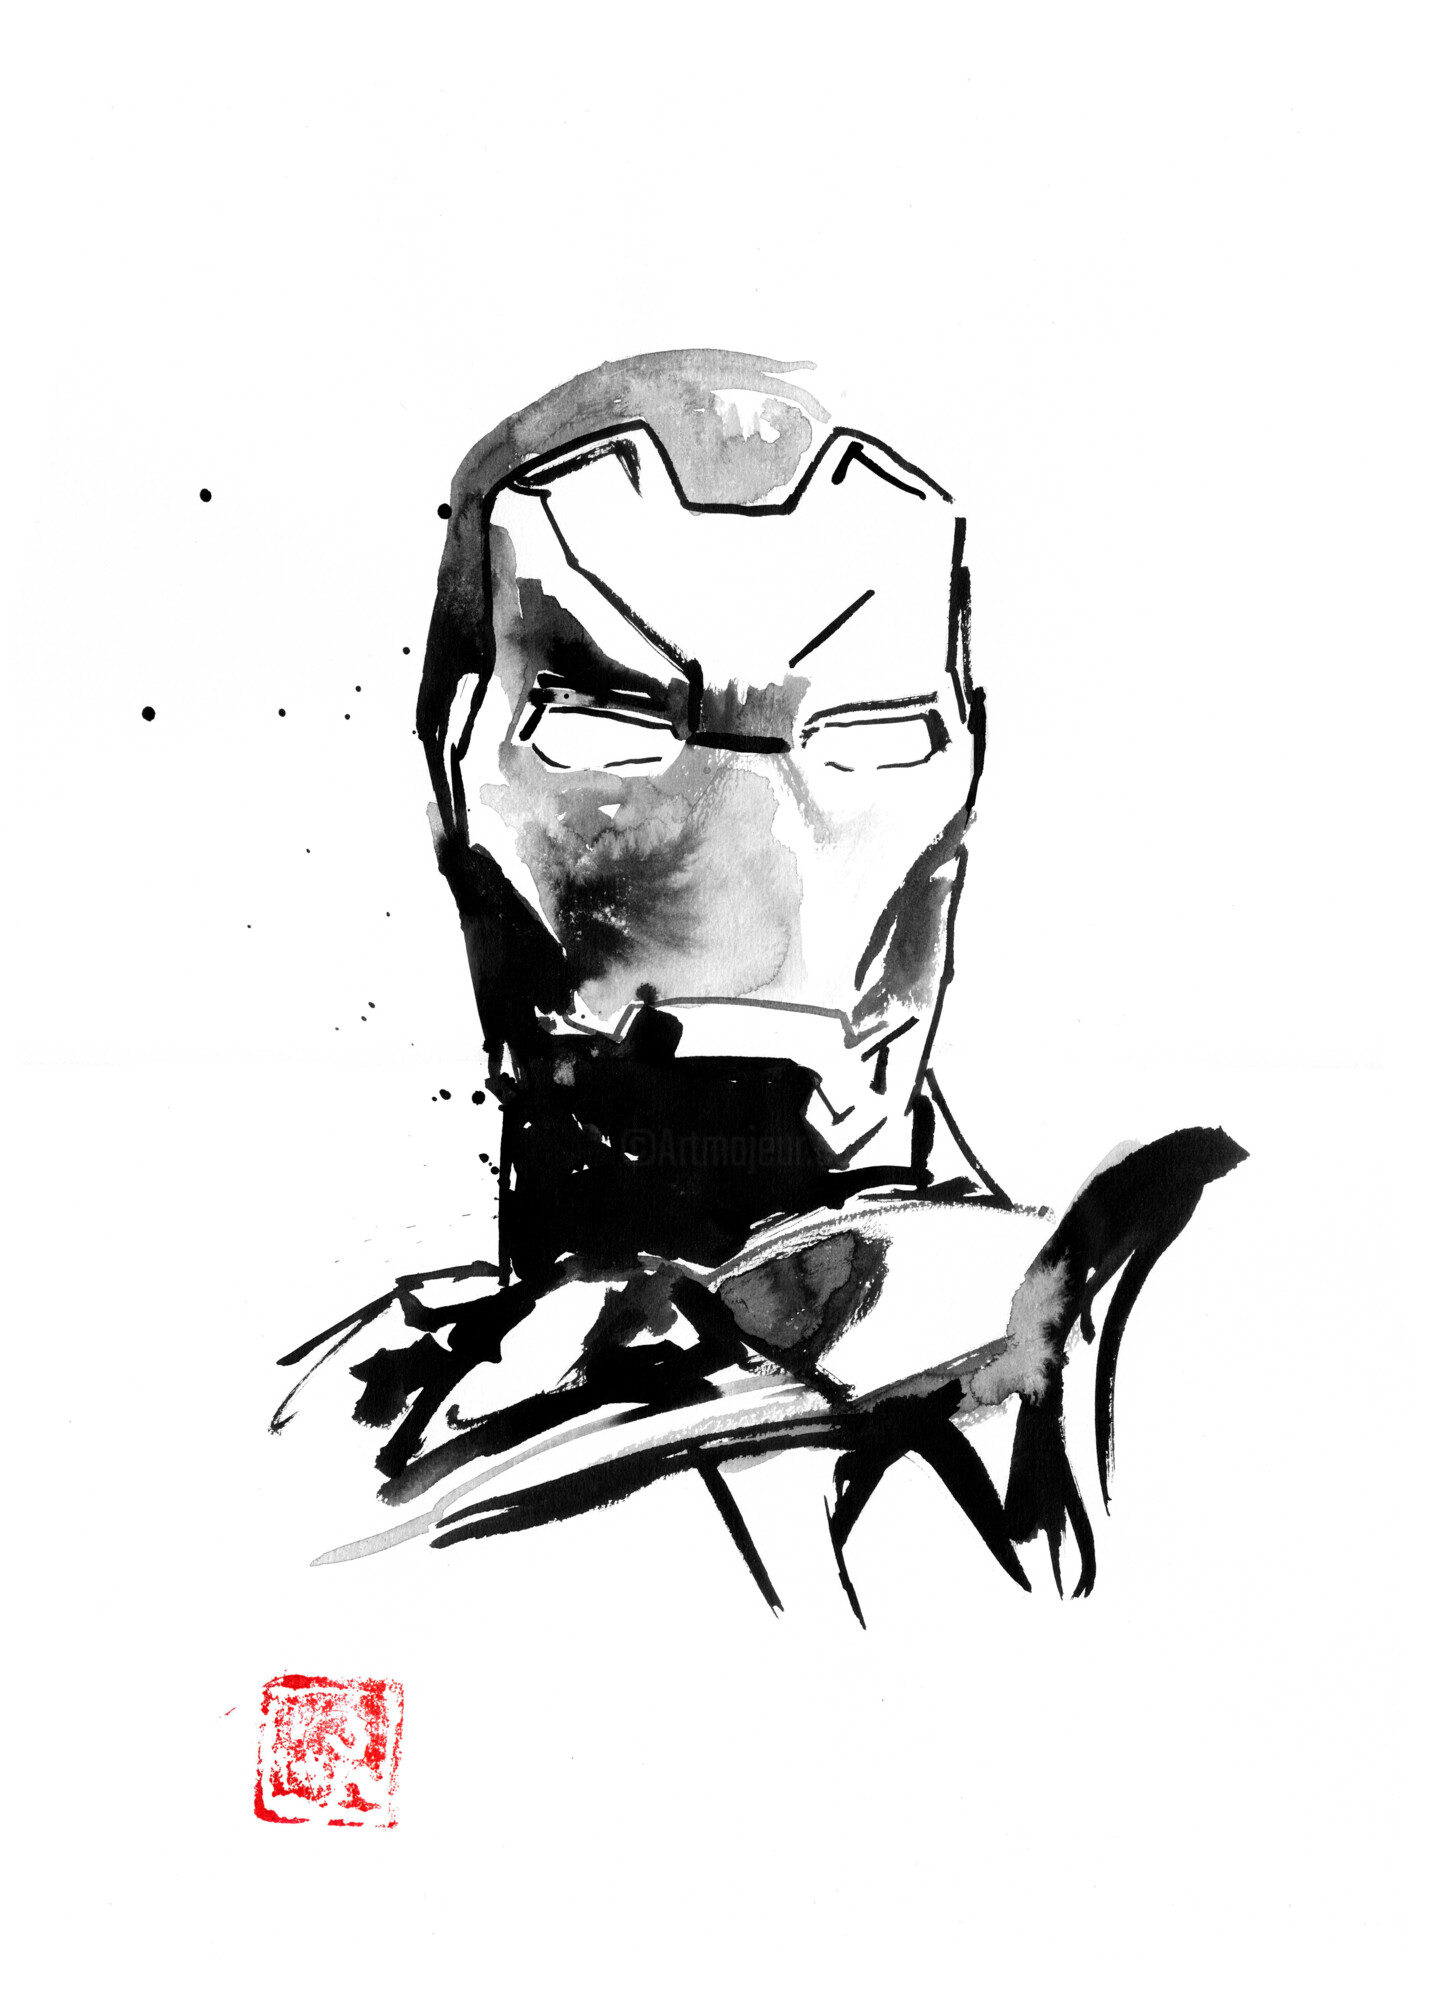 black and white iron man outline